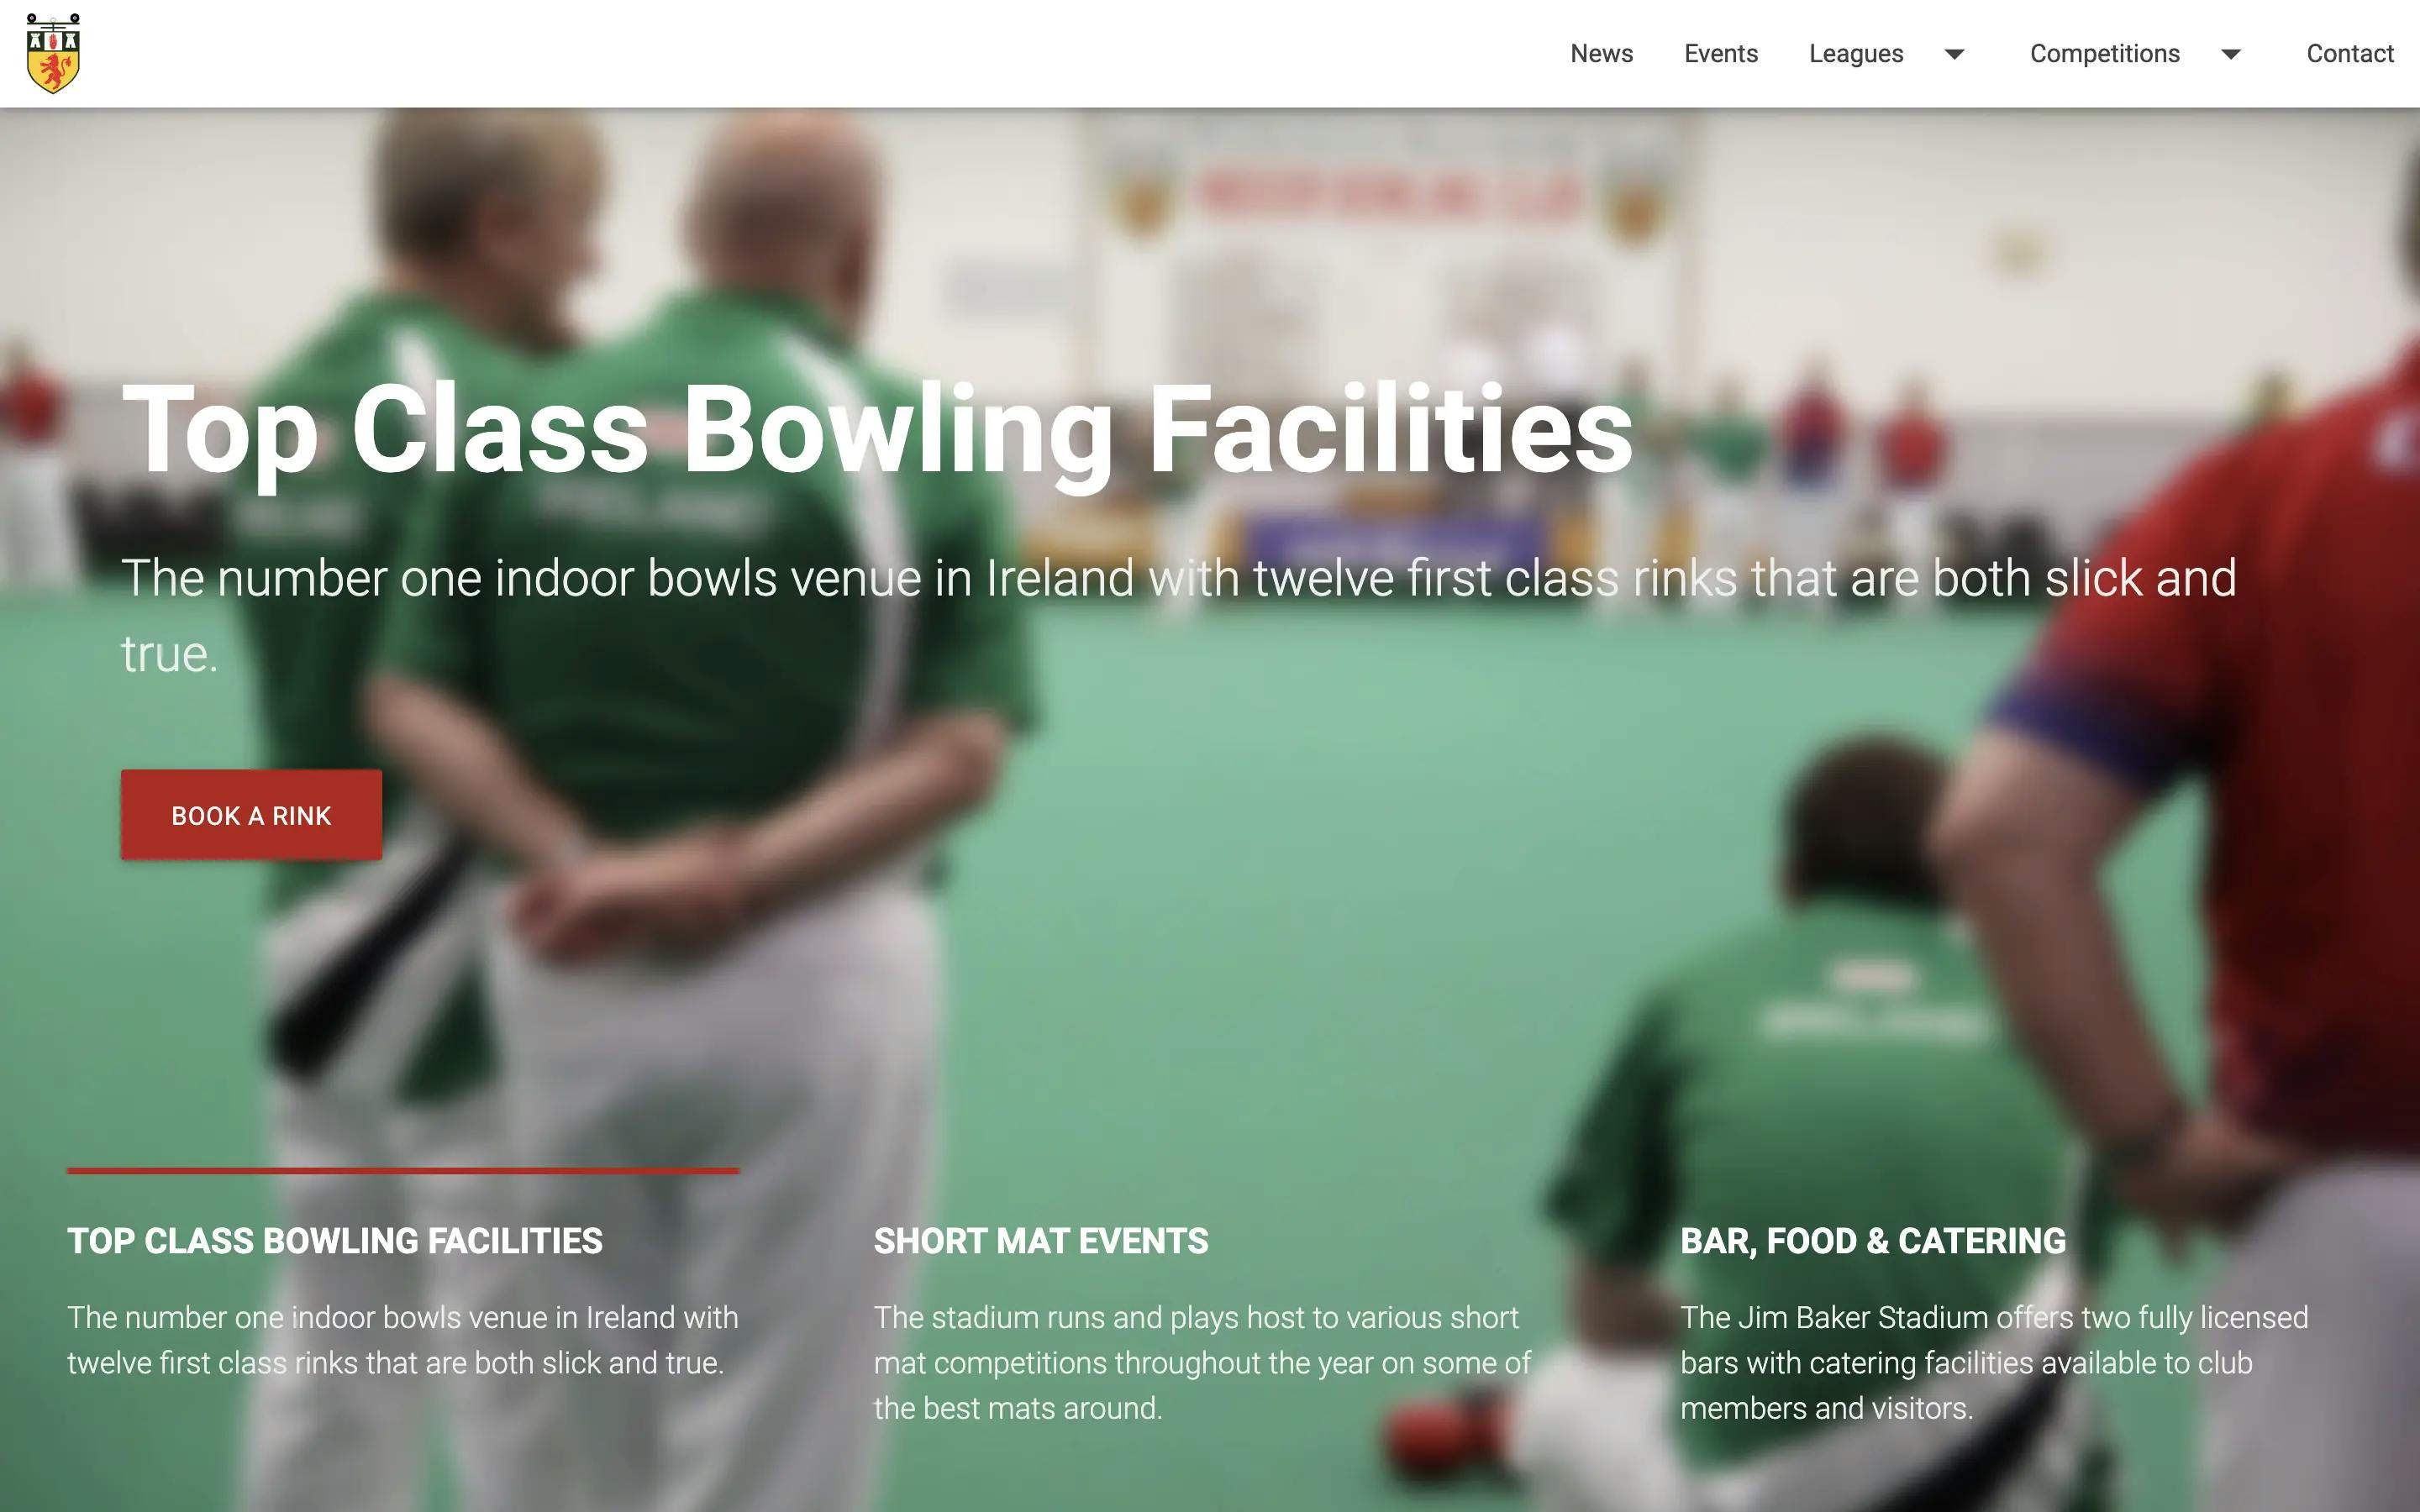 Jim Baker Stadium website homepage screenshot